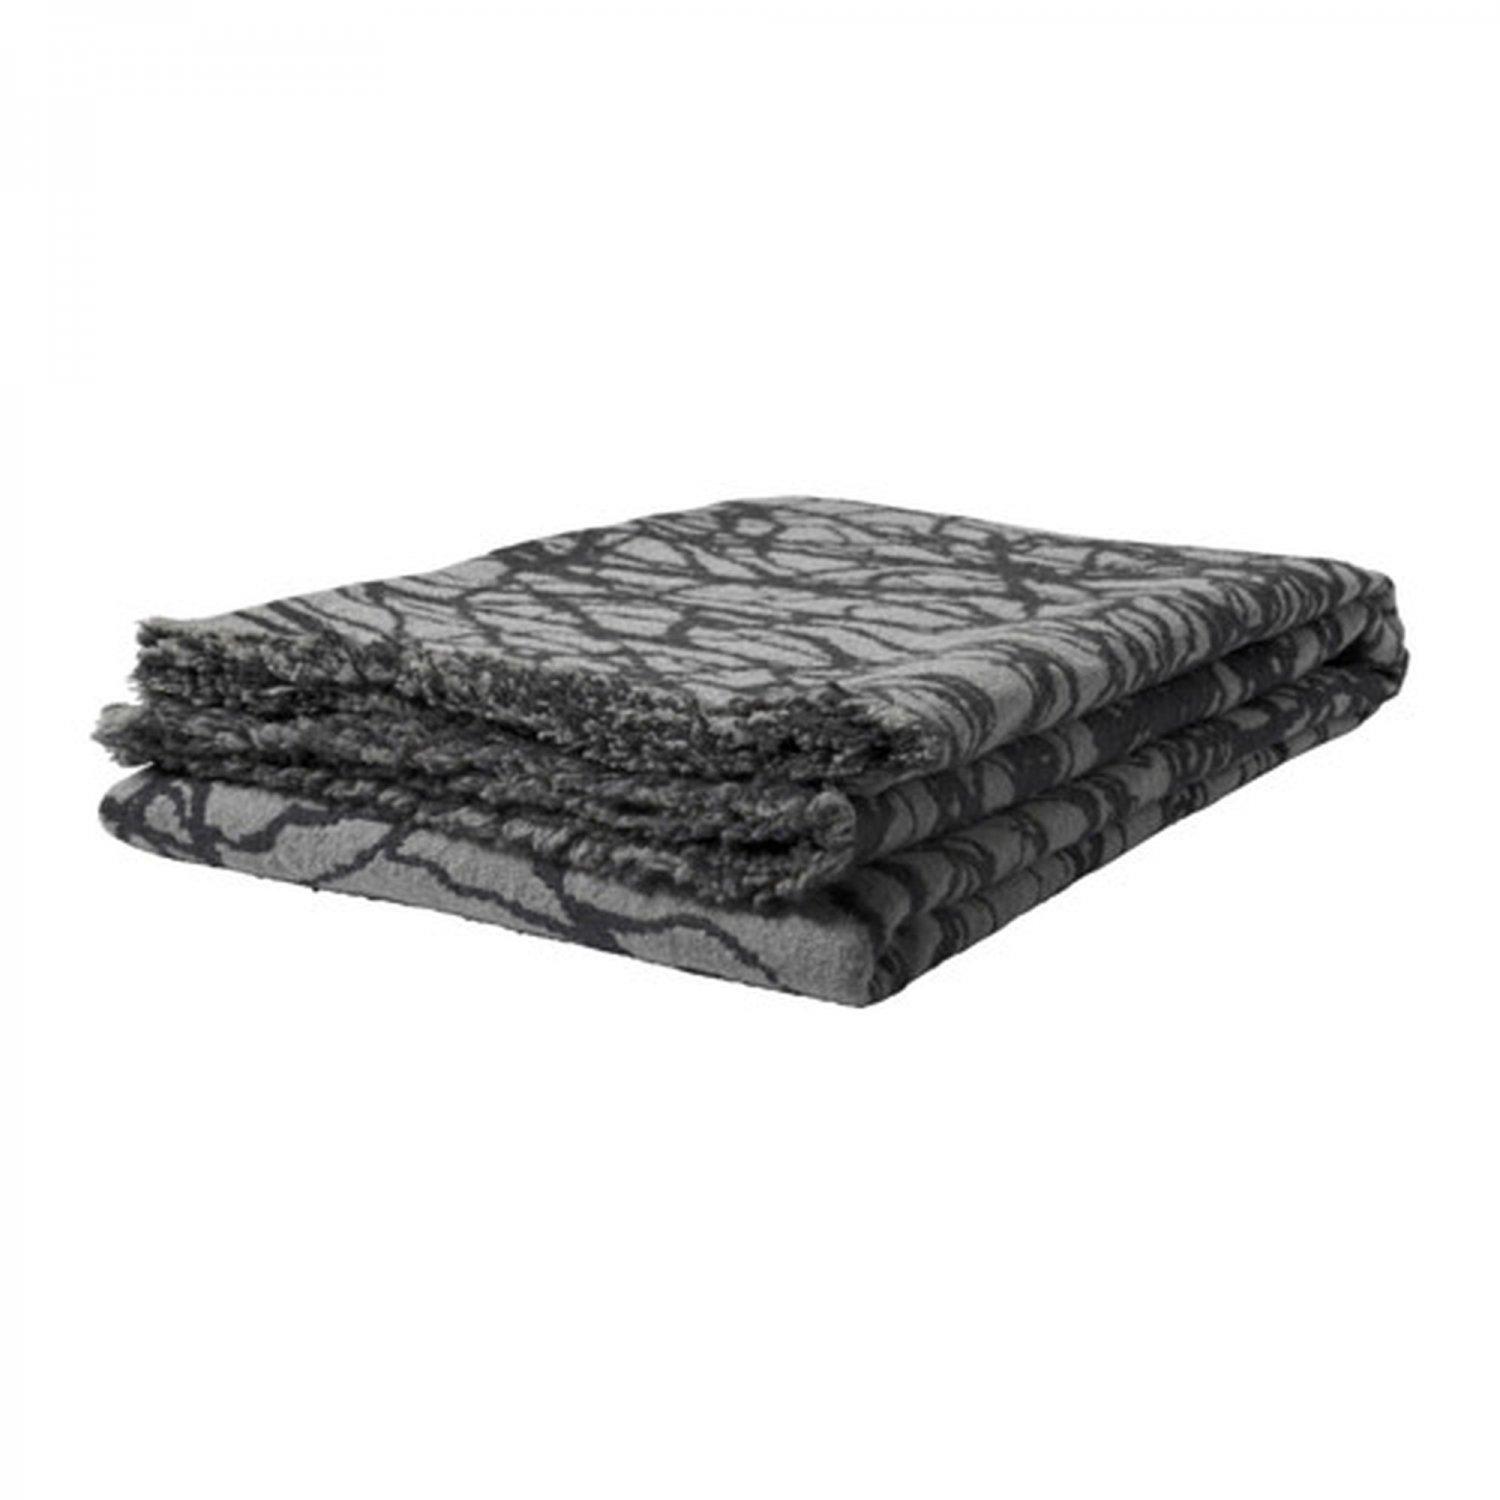 IKEA Svartan Bedspread Throw BLANKET Afghan BLACK Gray Modern SVÃ�RTAN Wool